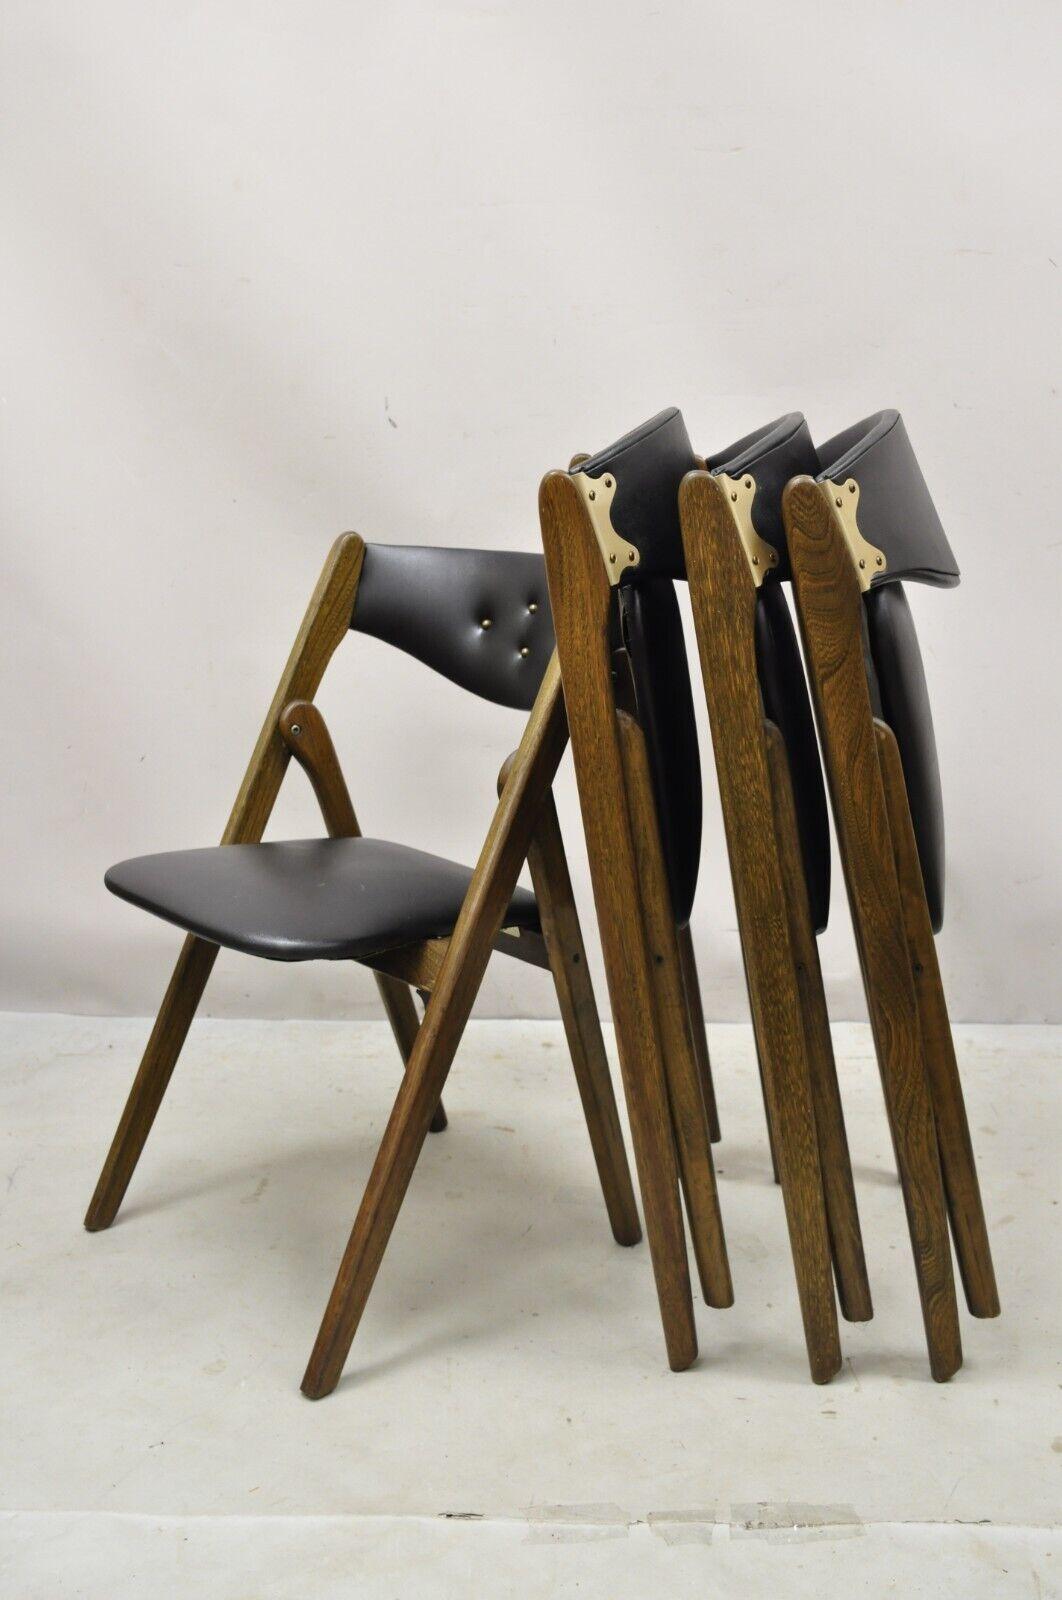 Vintage Coronet wonderfold black vinyl wooden folding game chairs - set of 4. Item features (4) folding chairs, black vinyl upholstery, tufted backrests, solid wood frames, very nice vintage set, sleek sculptural form. Circa mid-20th